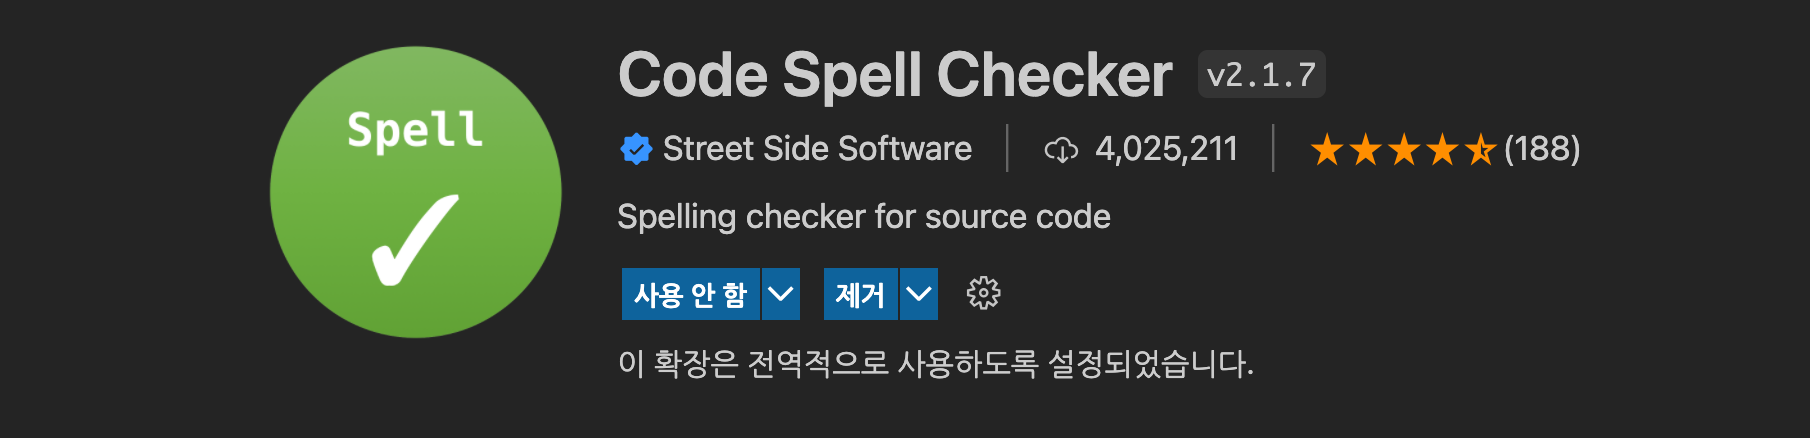 Code_Spell_Checker